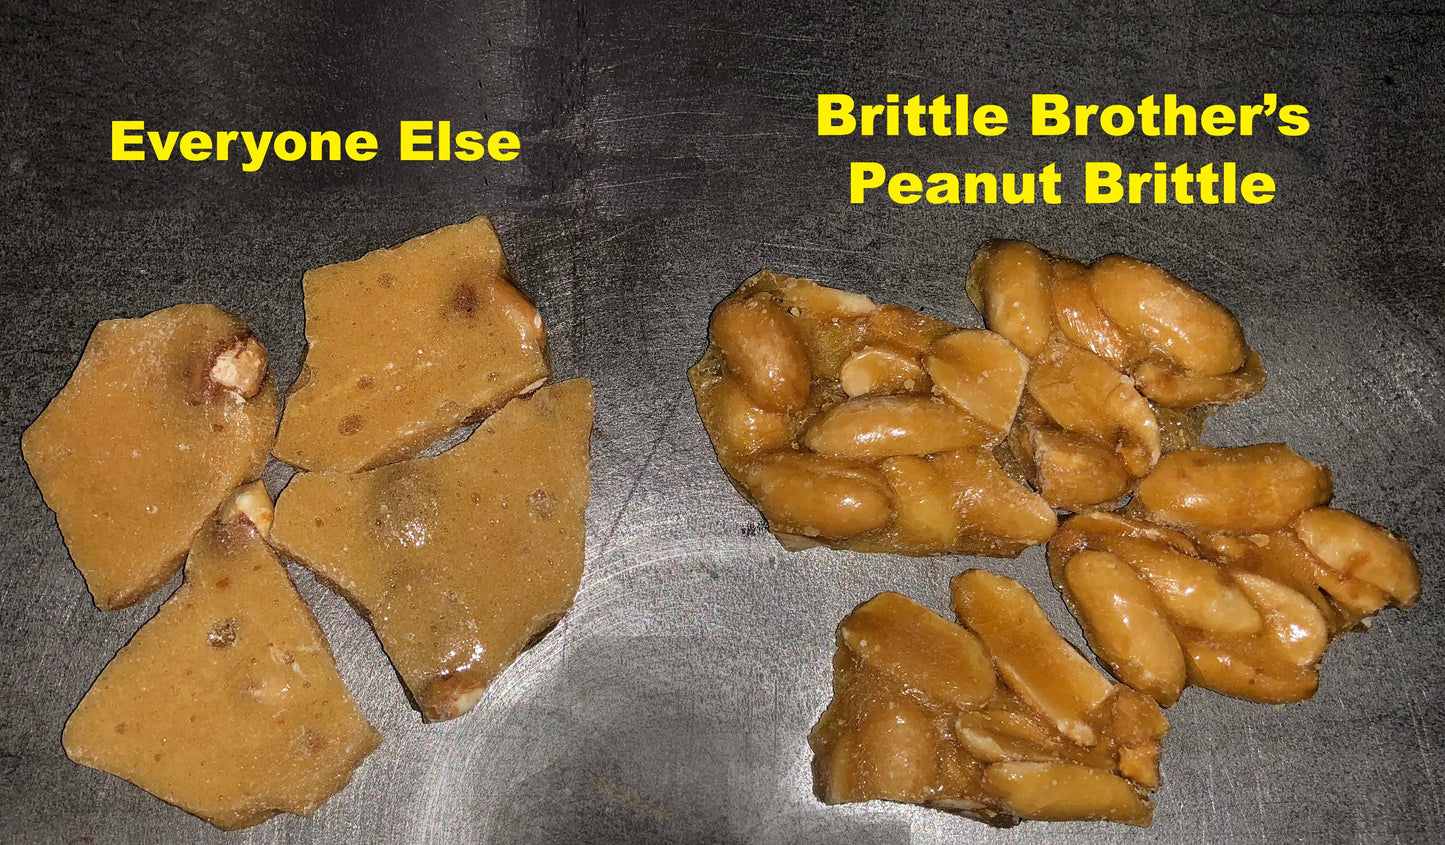 Brittle Brothers - Peanut Brittle - 5 oz. Bag (Wholesale)